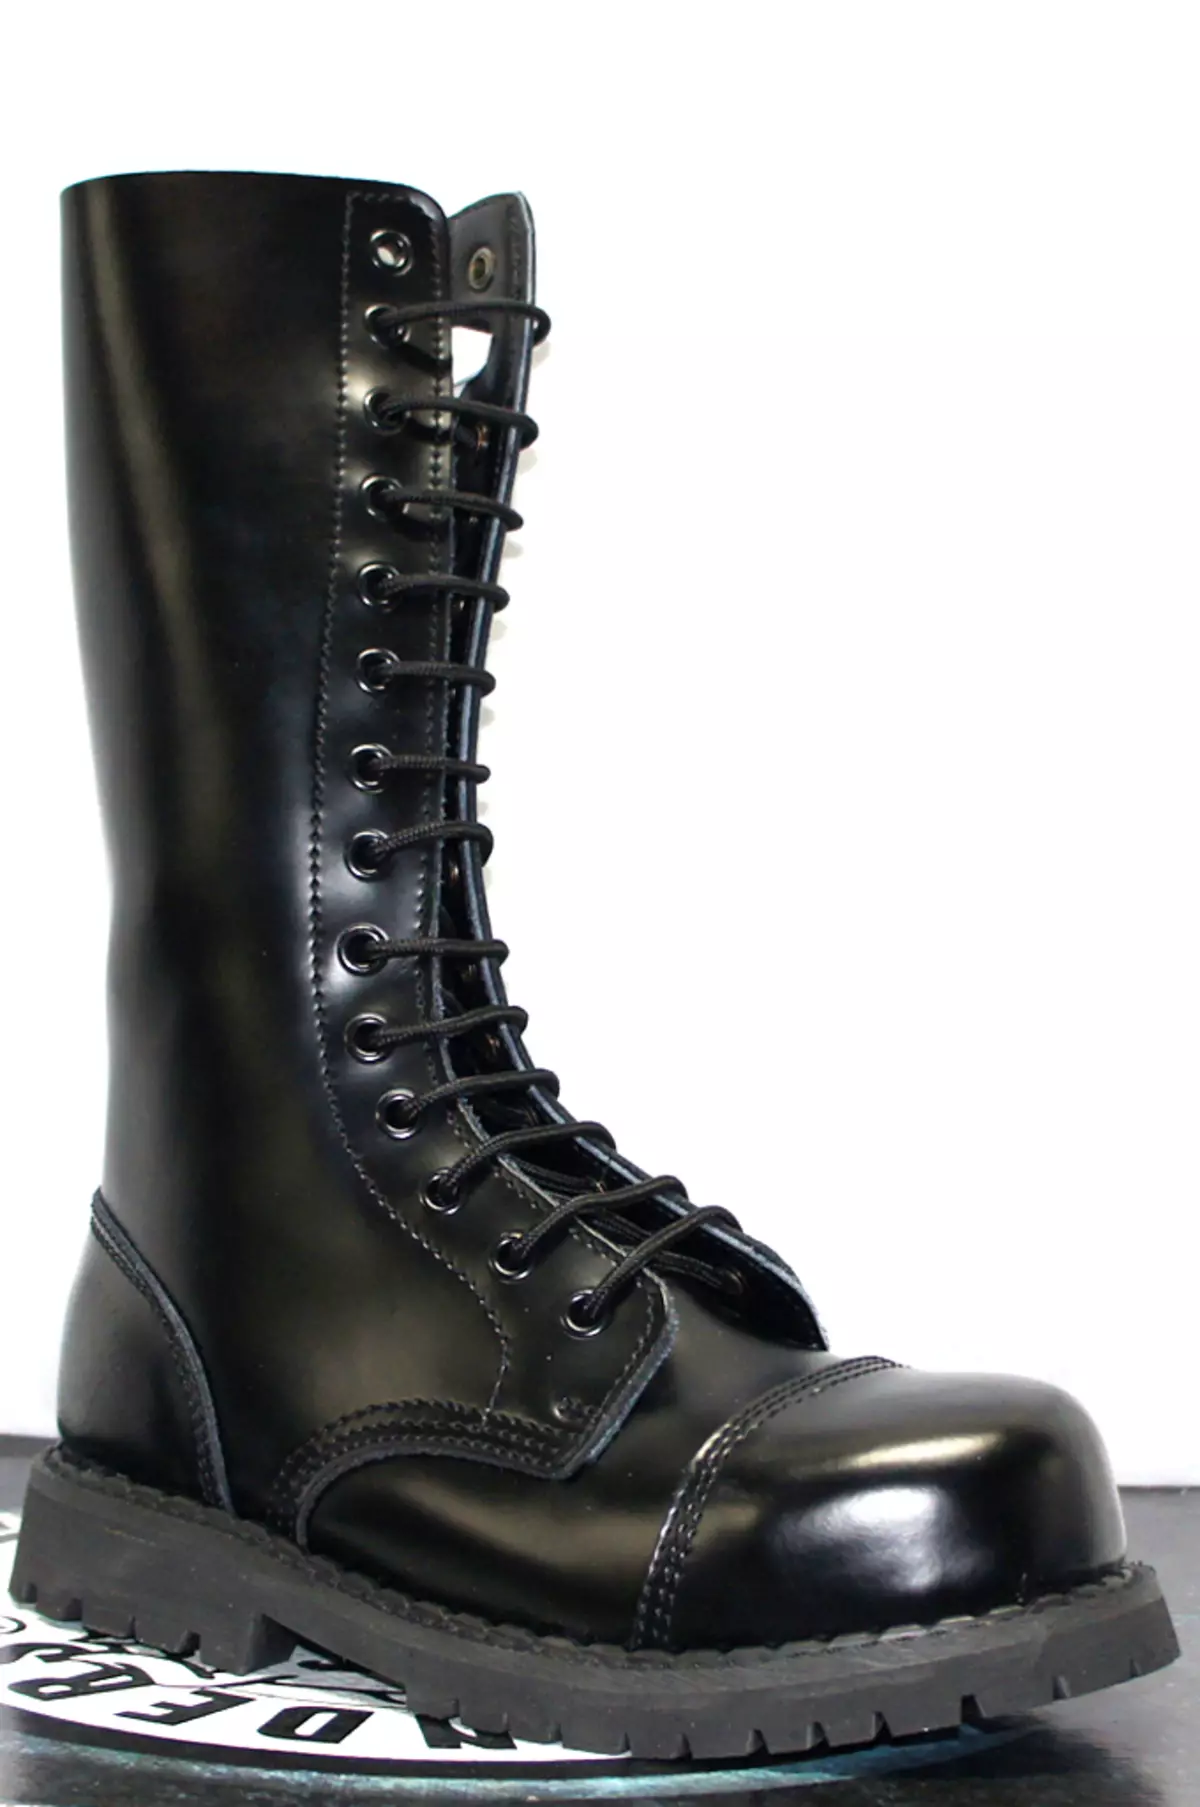 Boots (135 wêne): Trendên Fashion 2021, ji Rock Rock, Eva, Camel, Grinders, How to Wear Derby With Jeans, Mîlîtar & Burgundy Style 1842_104